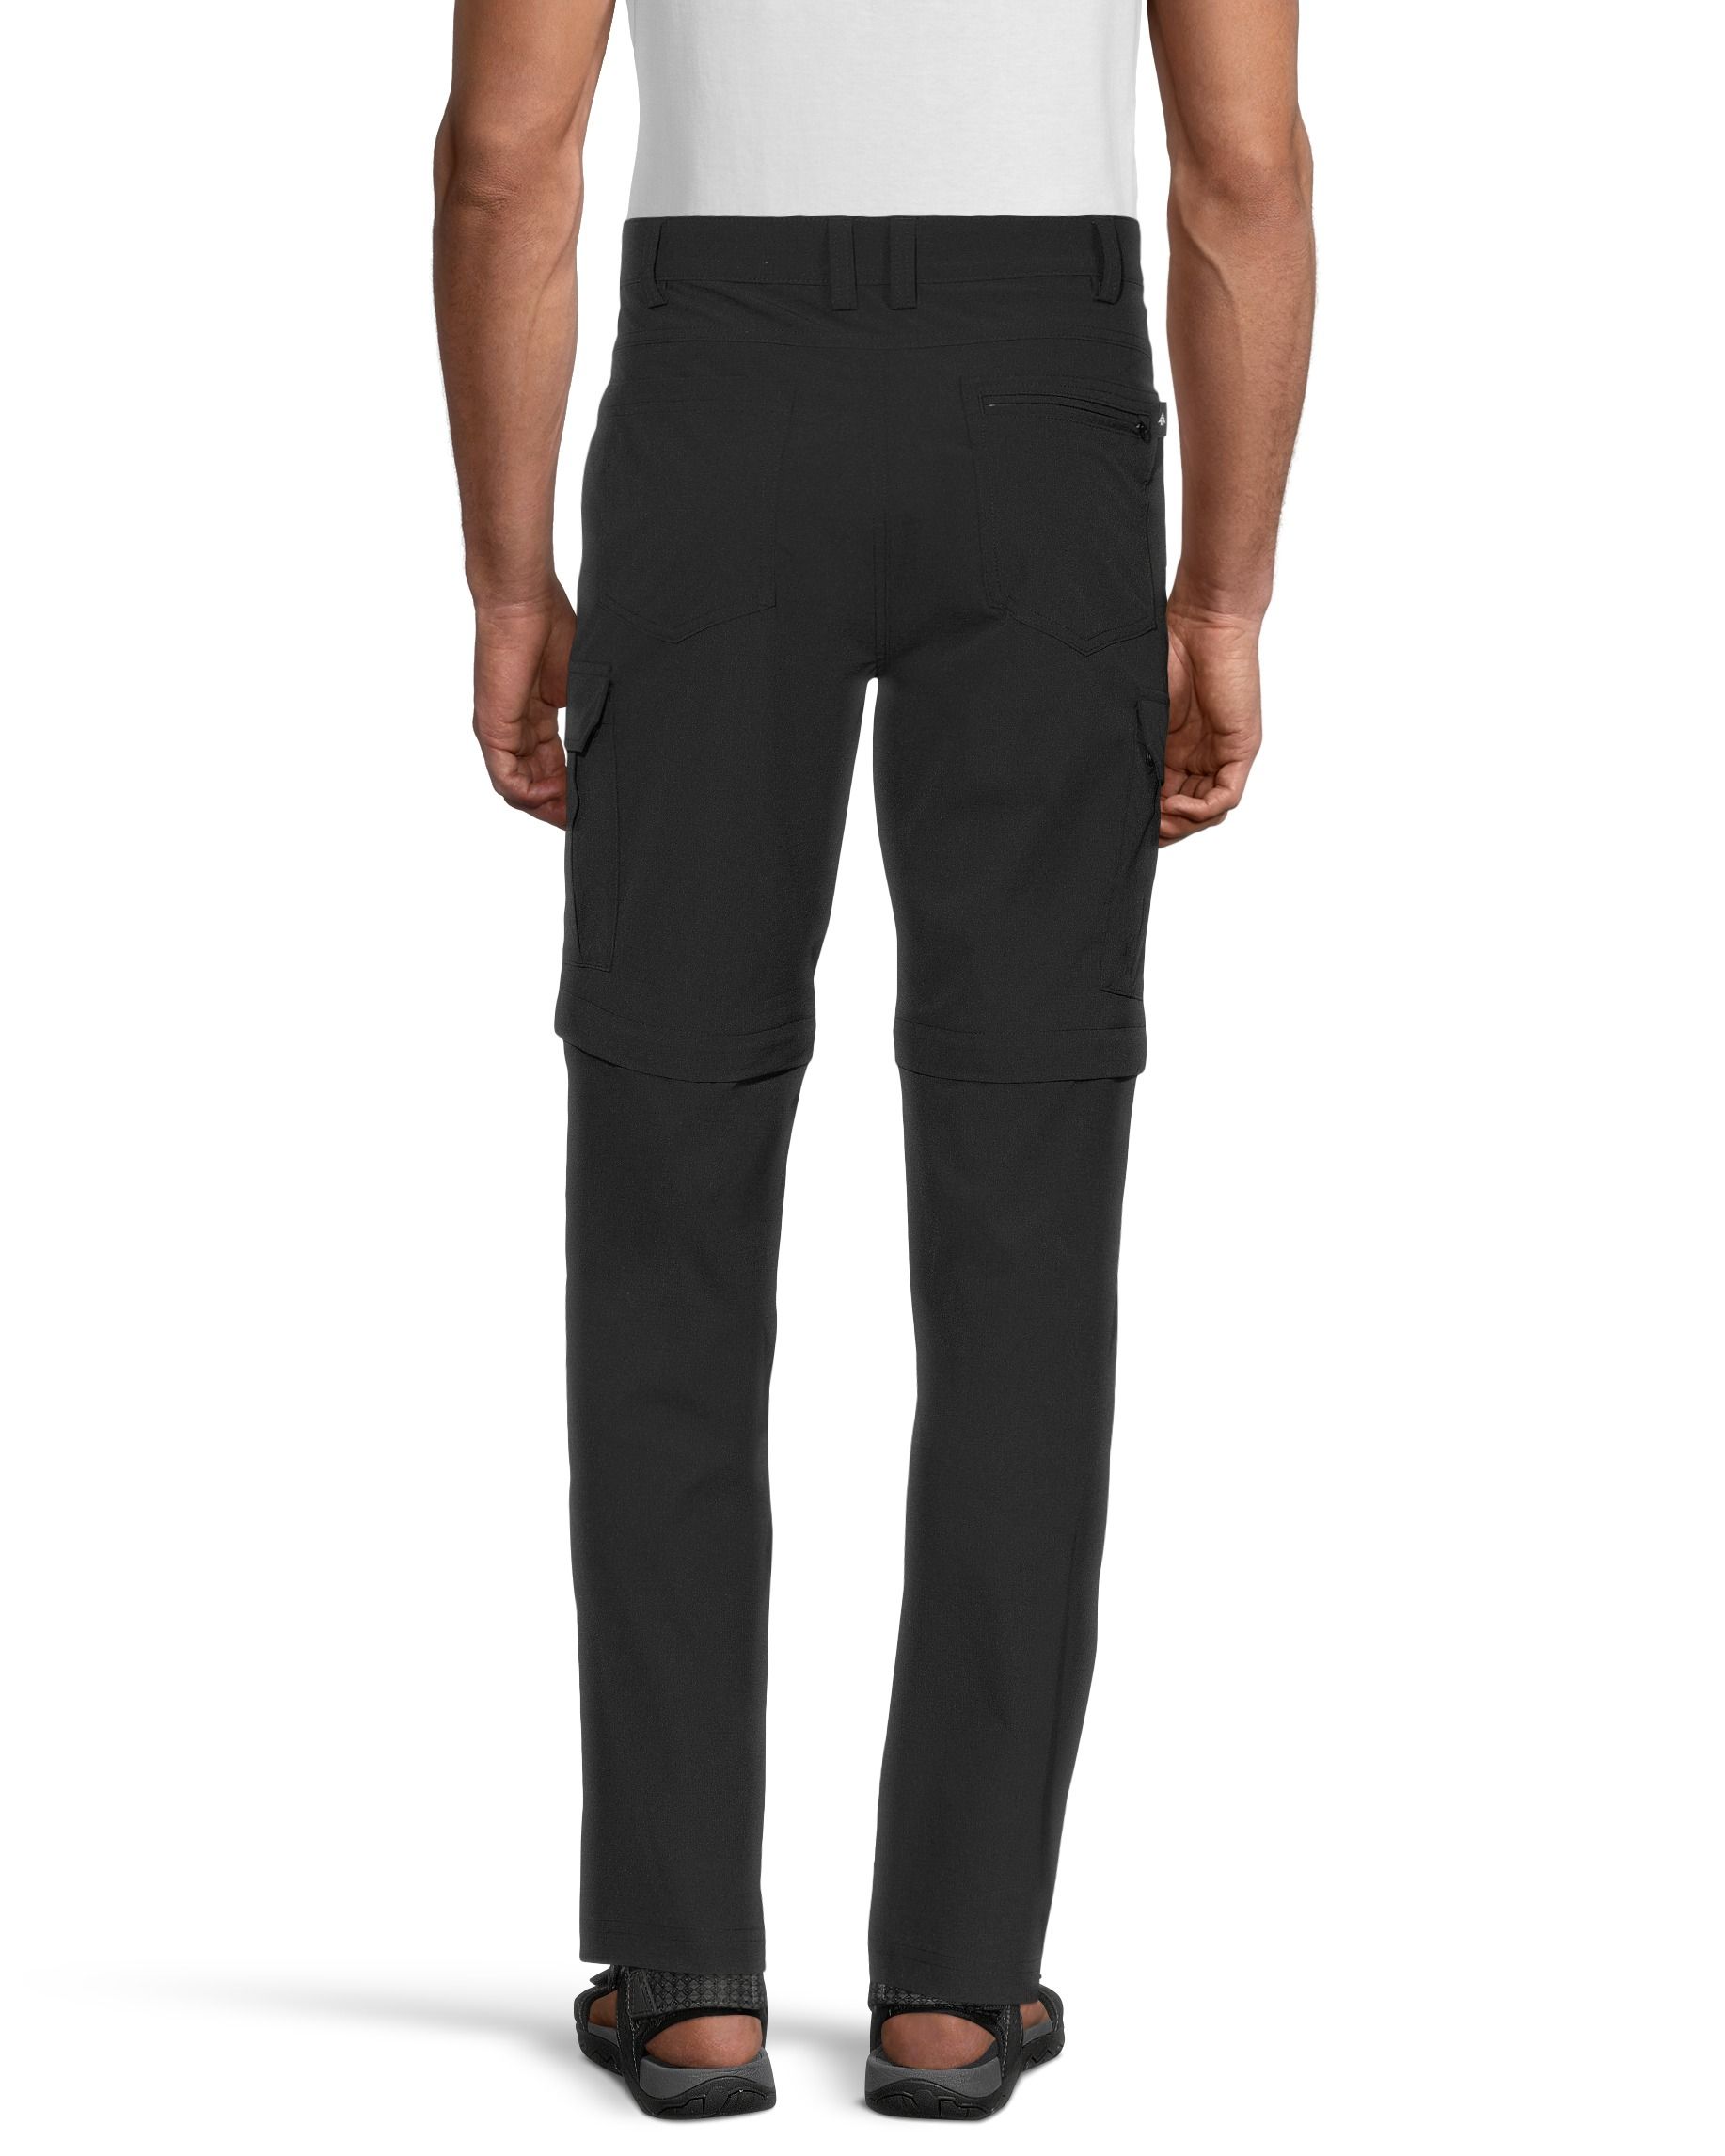 eczipvz Mens Pants Mens Stretch Convertible Pants Water Resistant Quick Dry Zip  Off Cagro Hiking Pants Khaki,XXL - Walmart.com